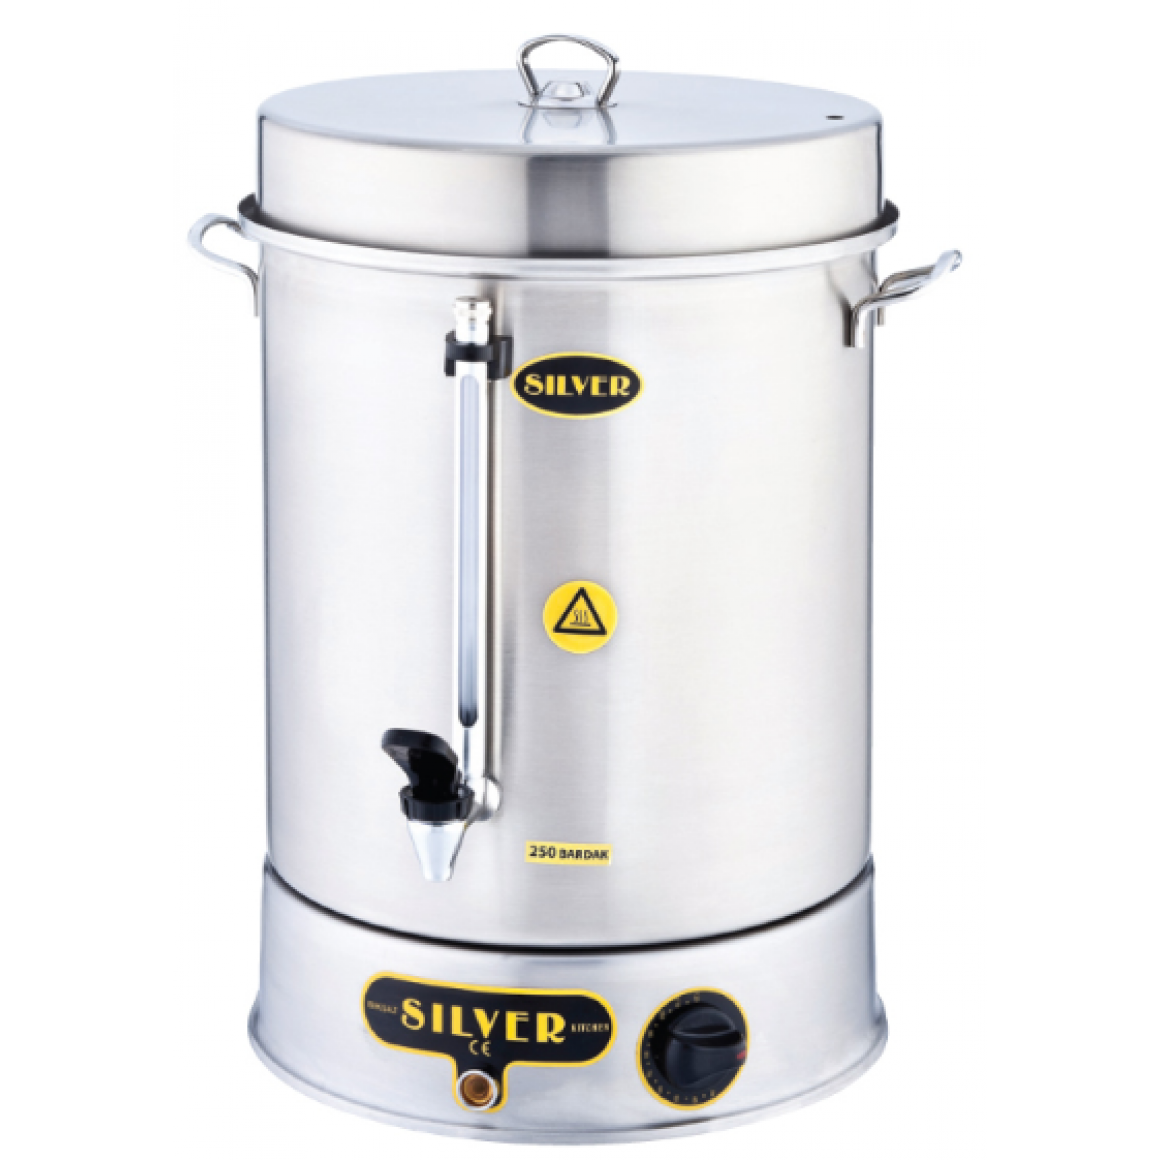 Water Boiler 120 Cup